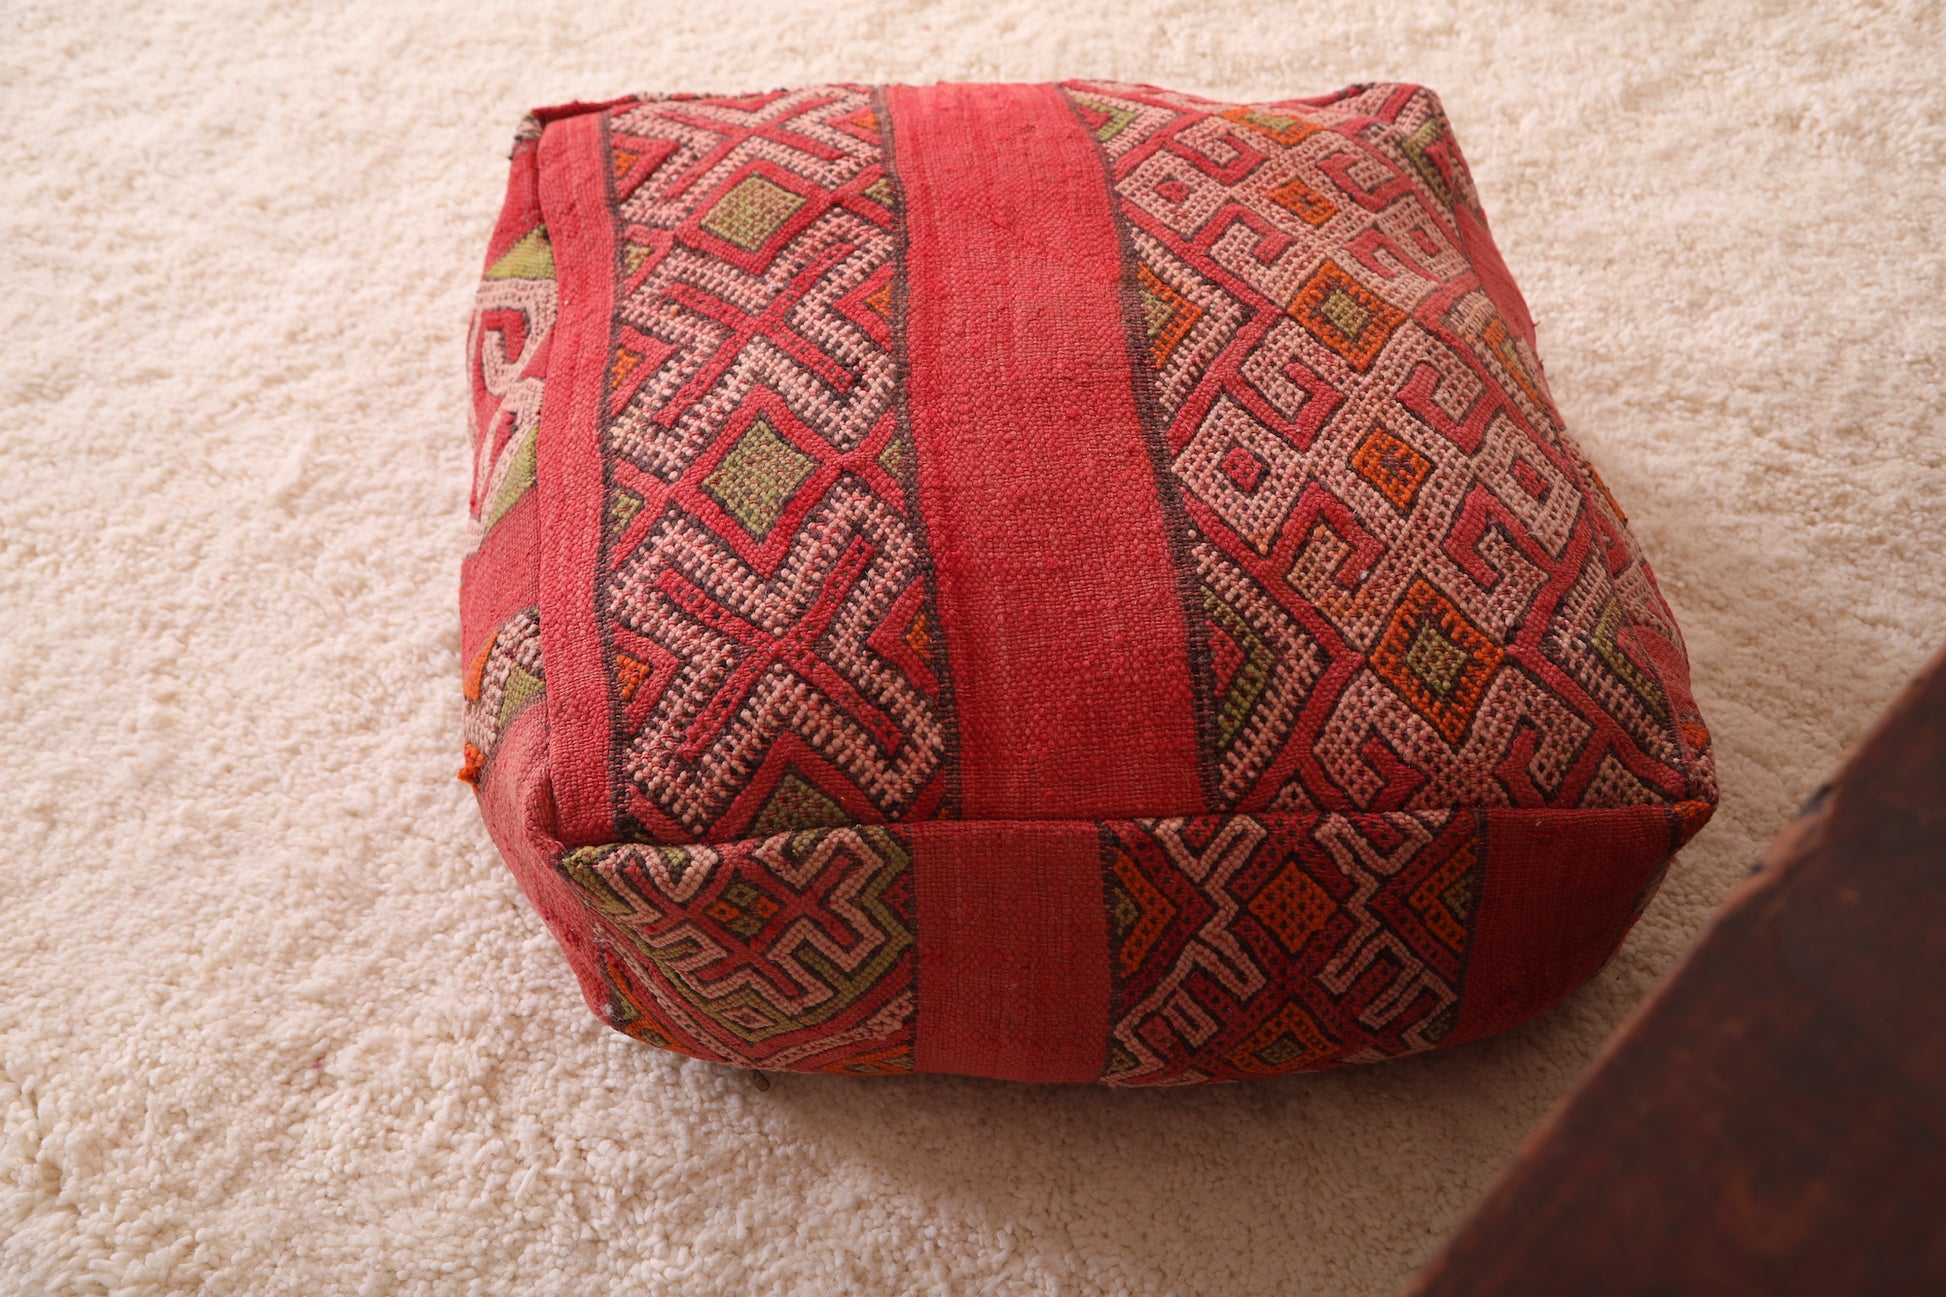 Red Moroccan berber kilim rug Pouf ottoman